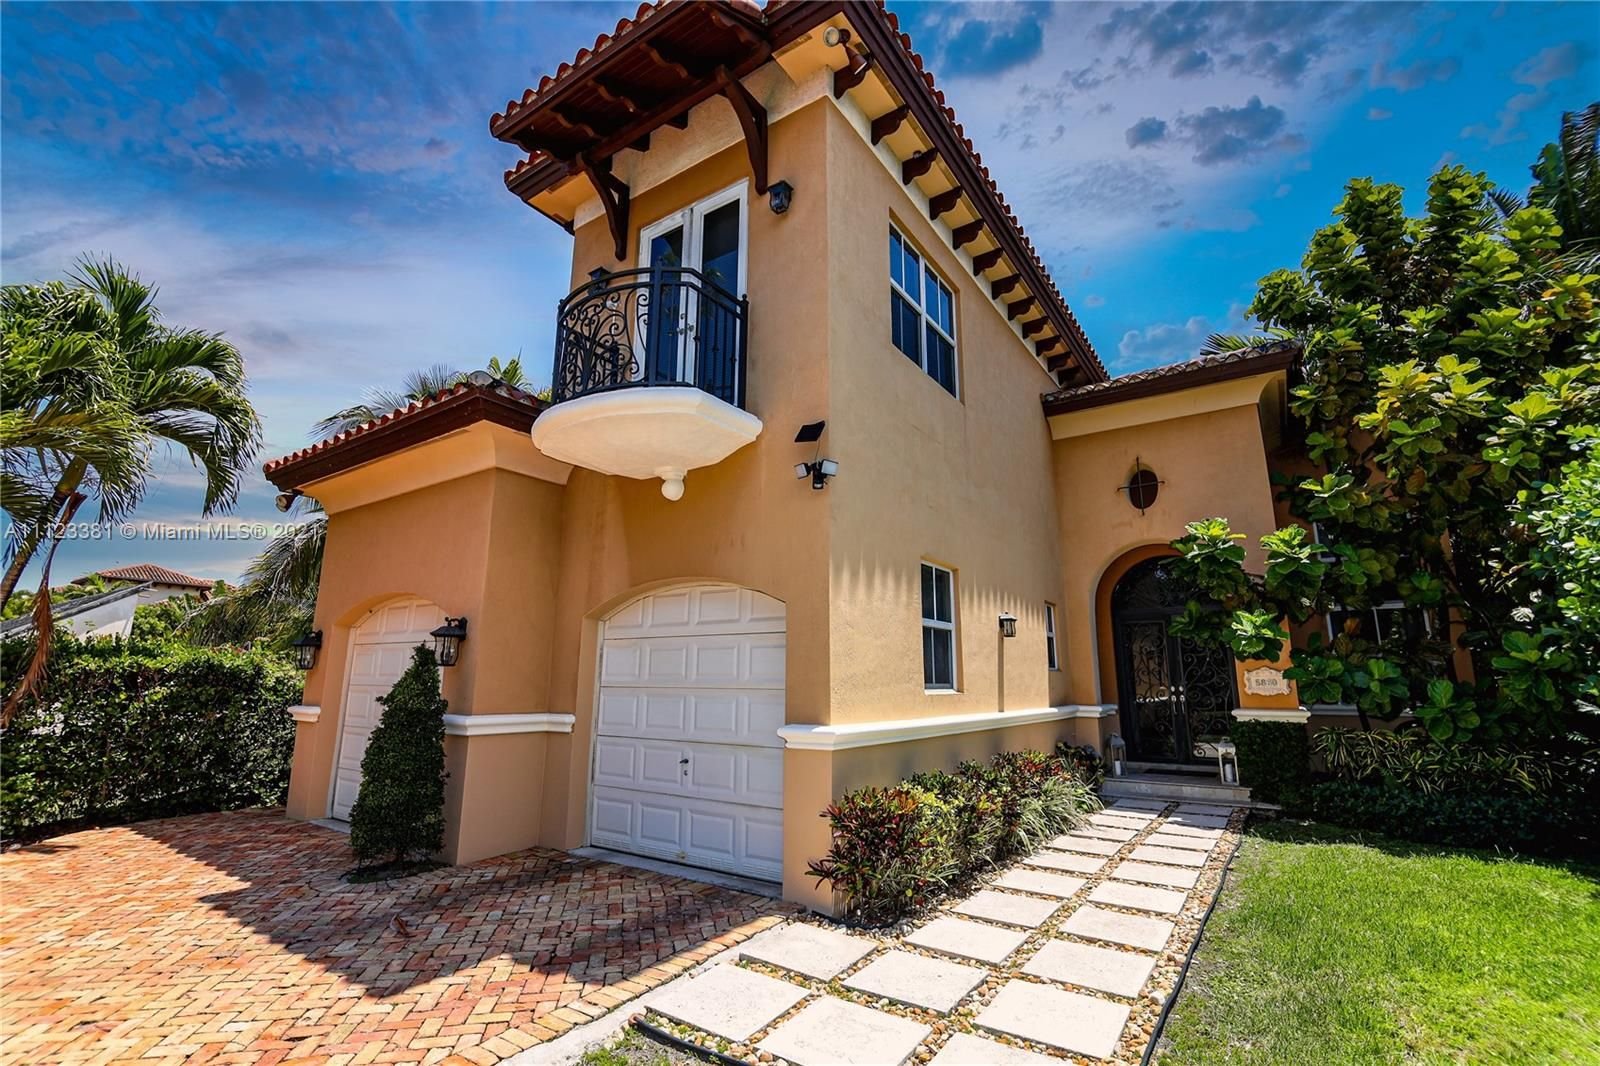 Real estate property located at 5860 34th St, Miami-Dade County, Miami, FL